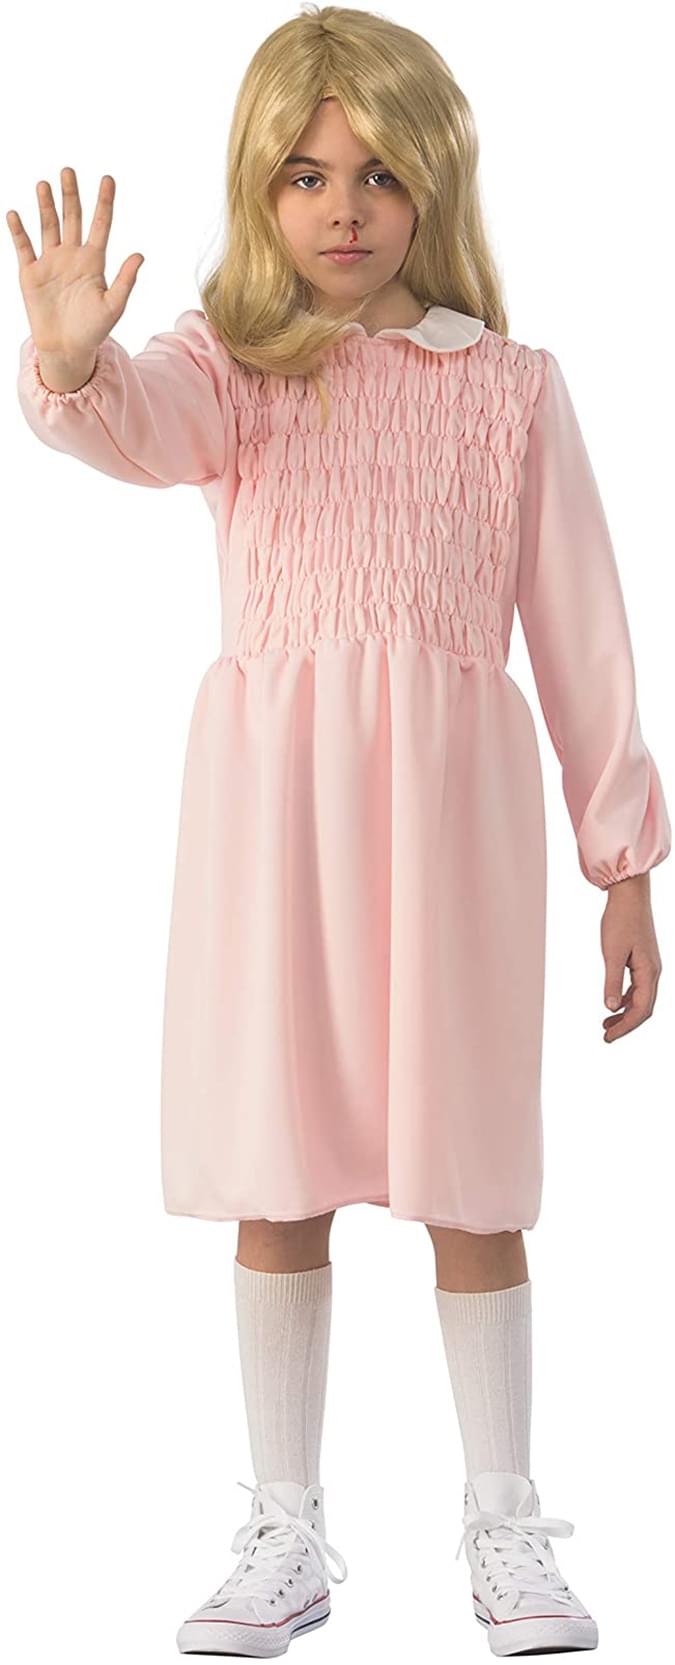 Stranger Things Eleven Long Sleeve Child Costume Dress - Pink